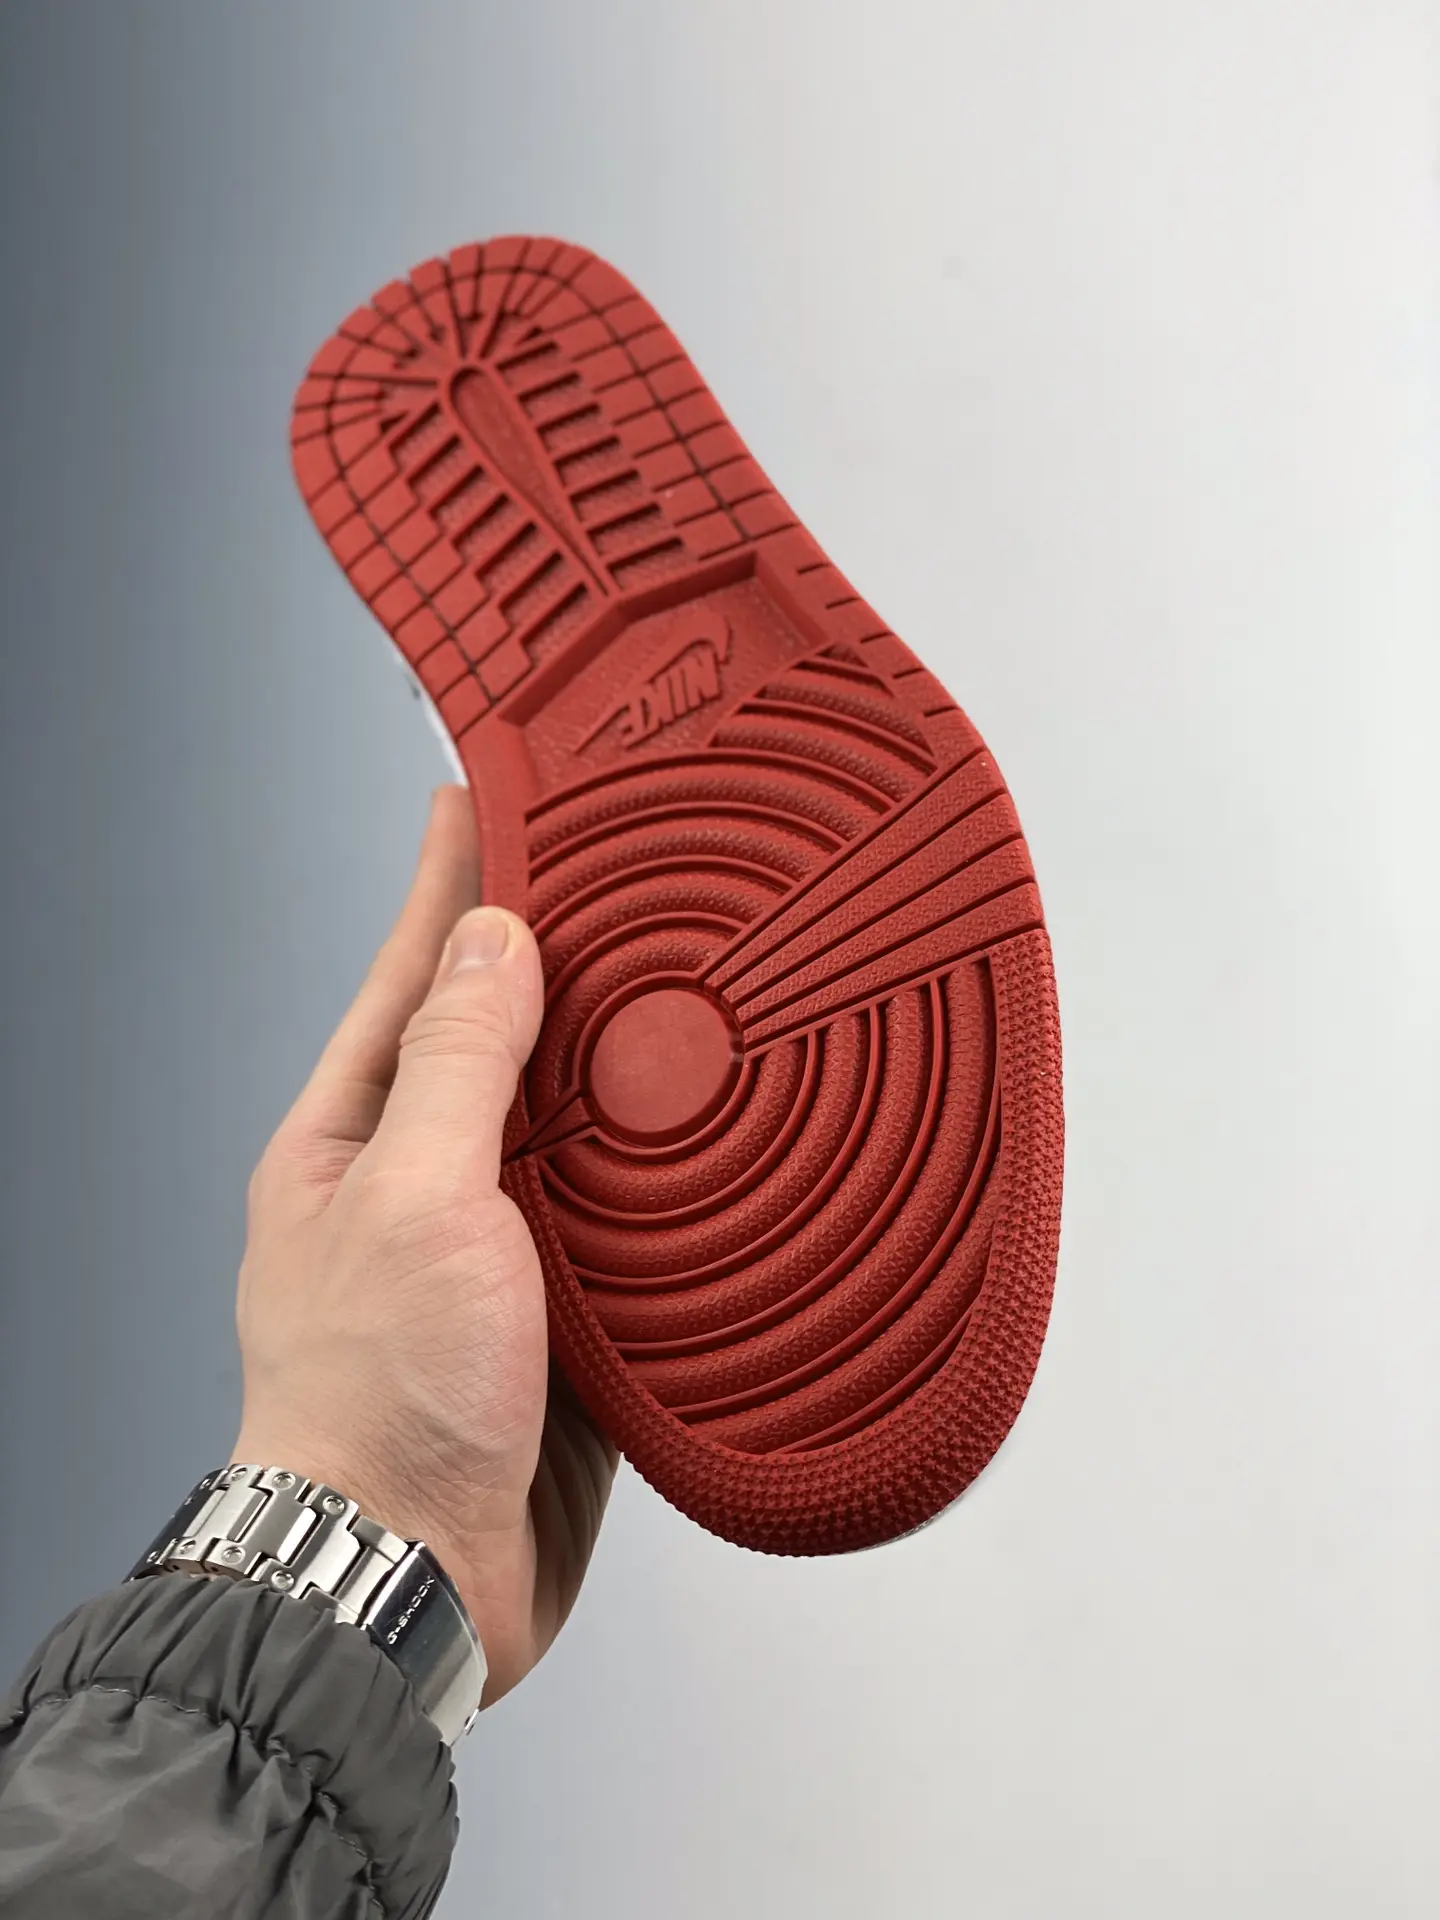 Wmns Air Jordan 1 Low 'Gym Red Black' Shoes Review | YtaYta